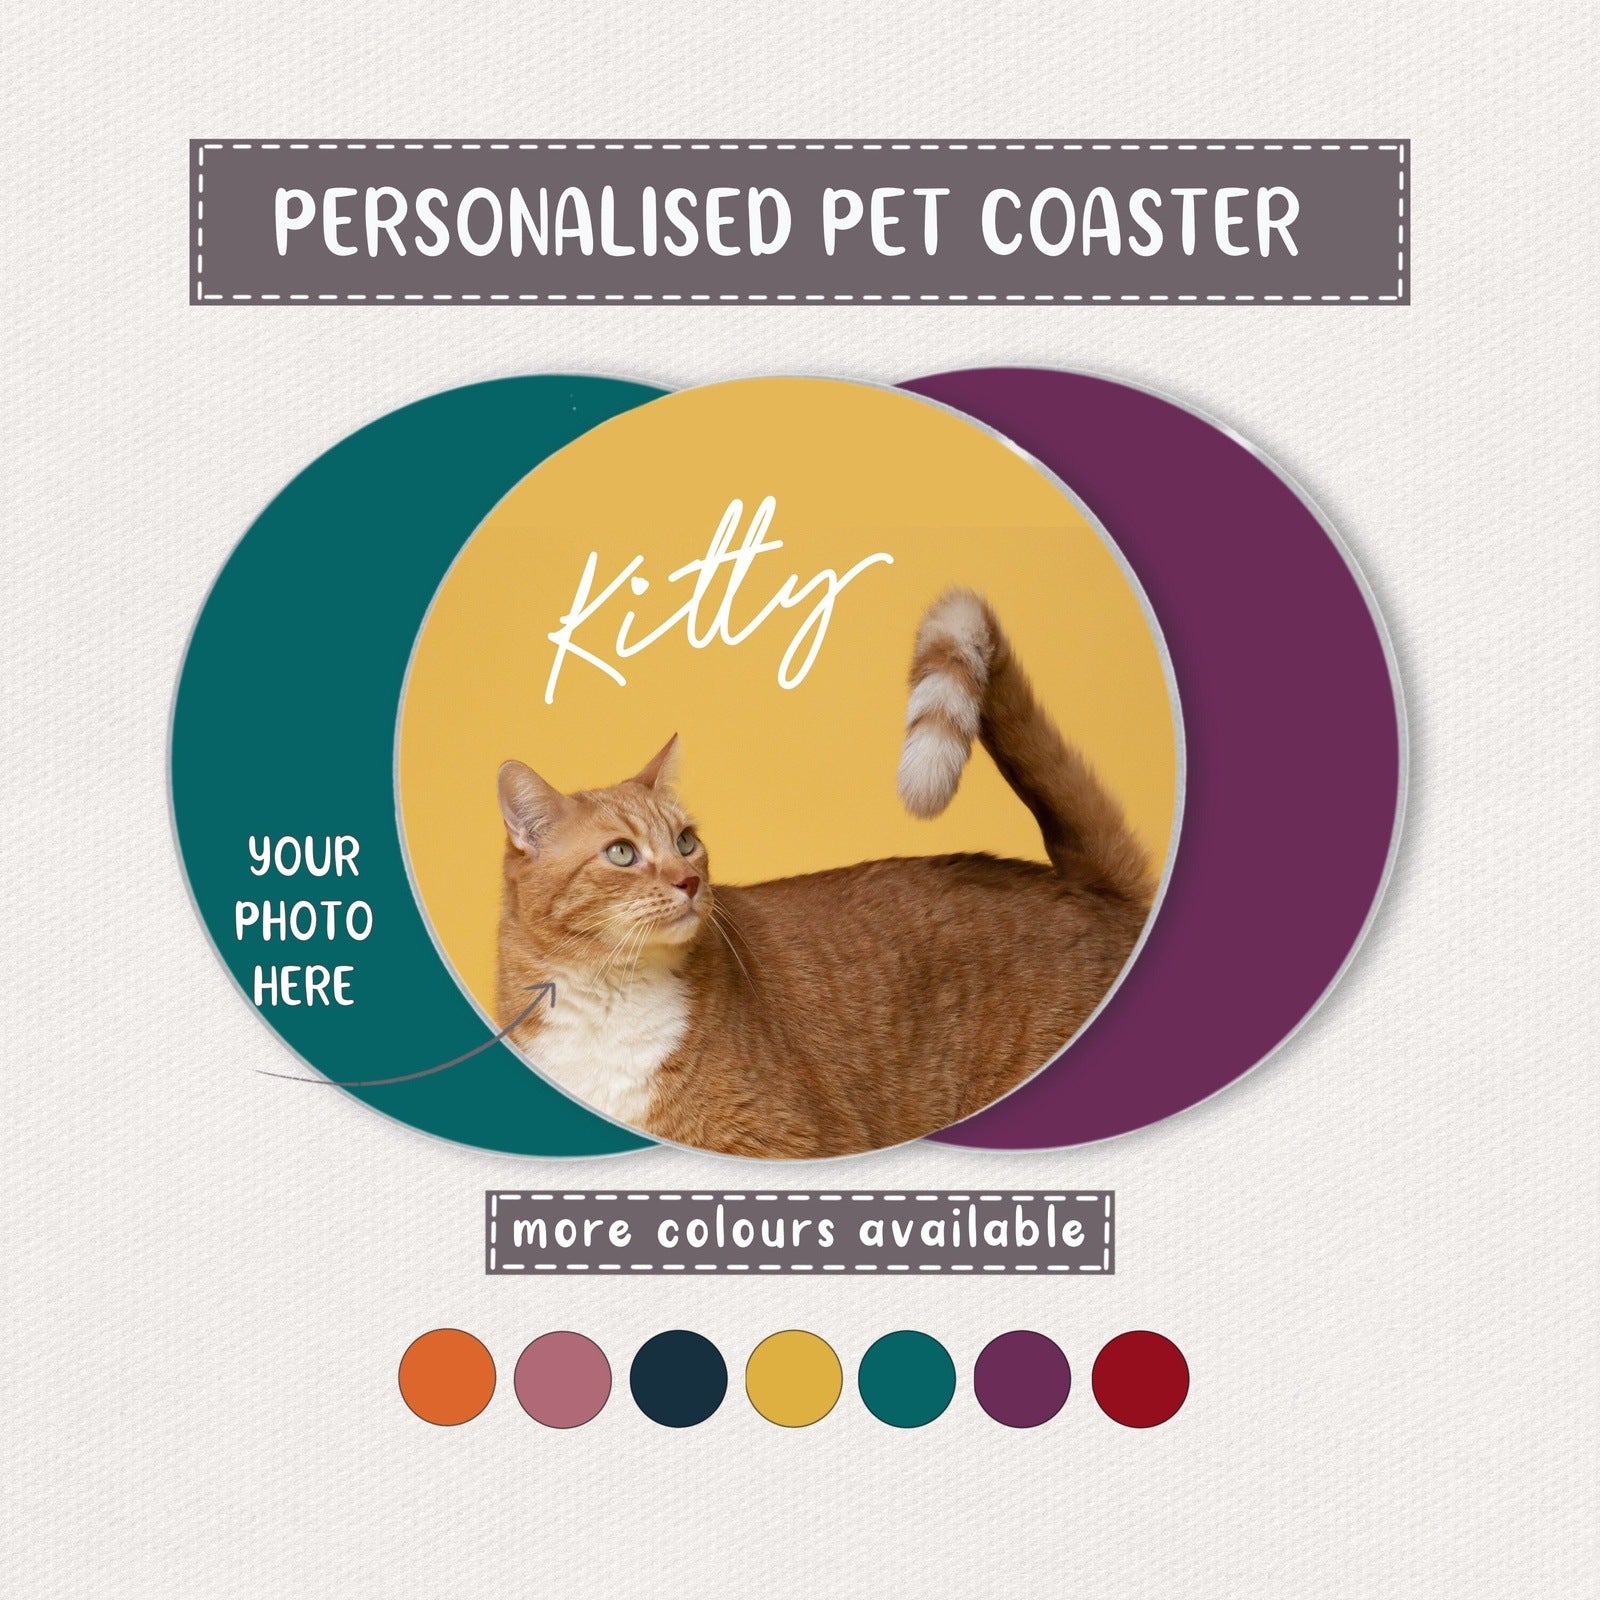 Personalised Pet Coaster